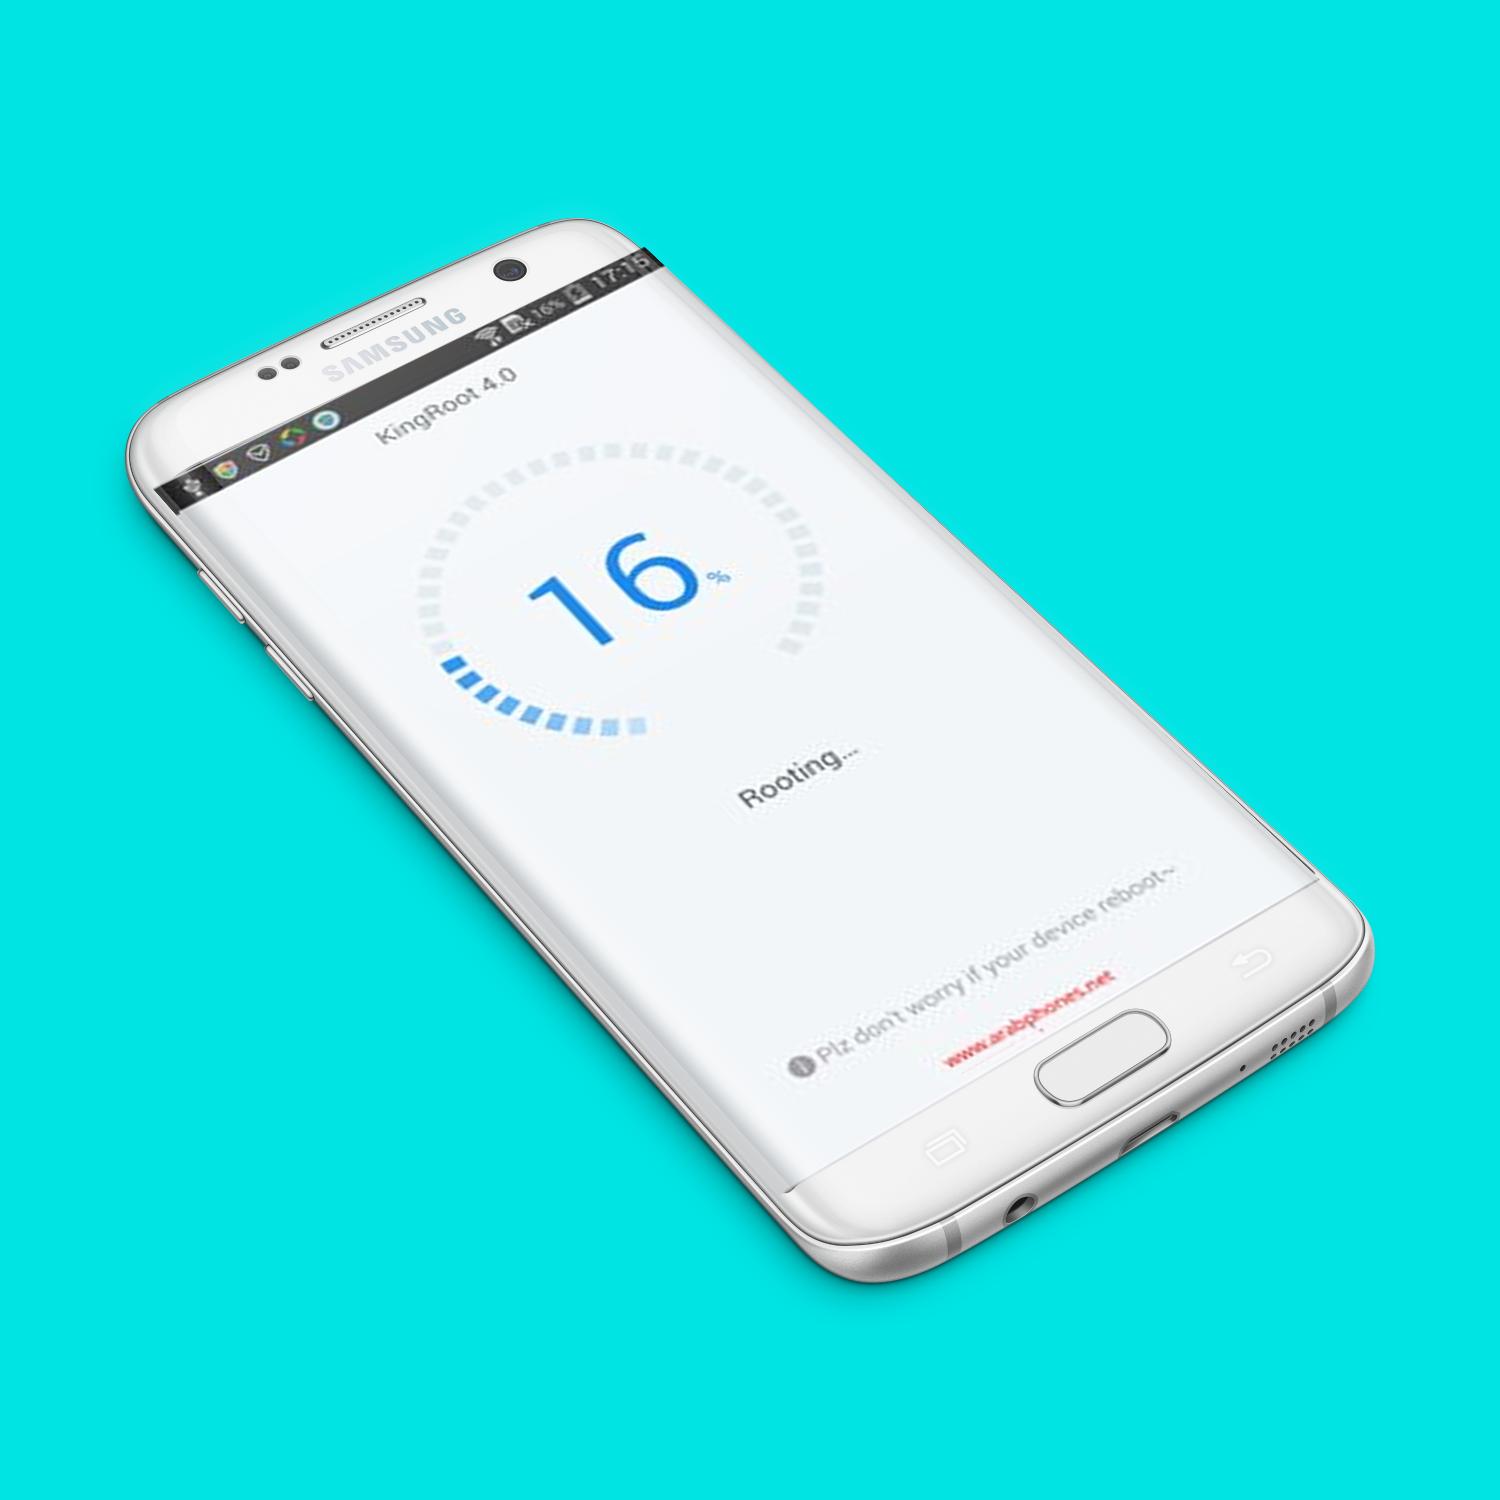 Samsung Android 22. Самсунг 11 версия андроид.